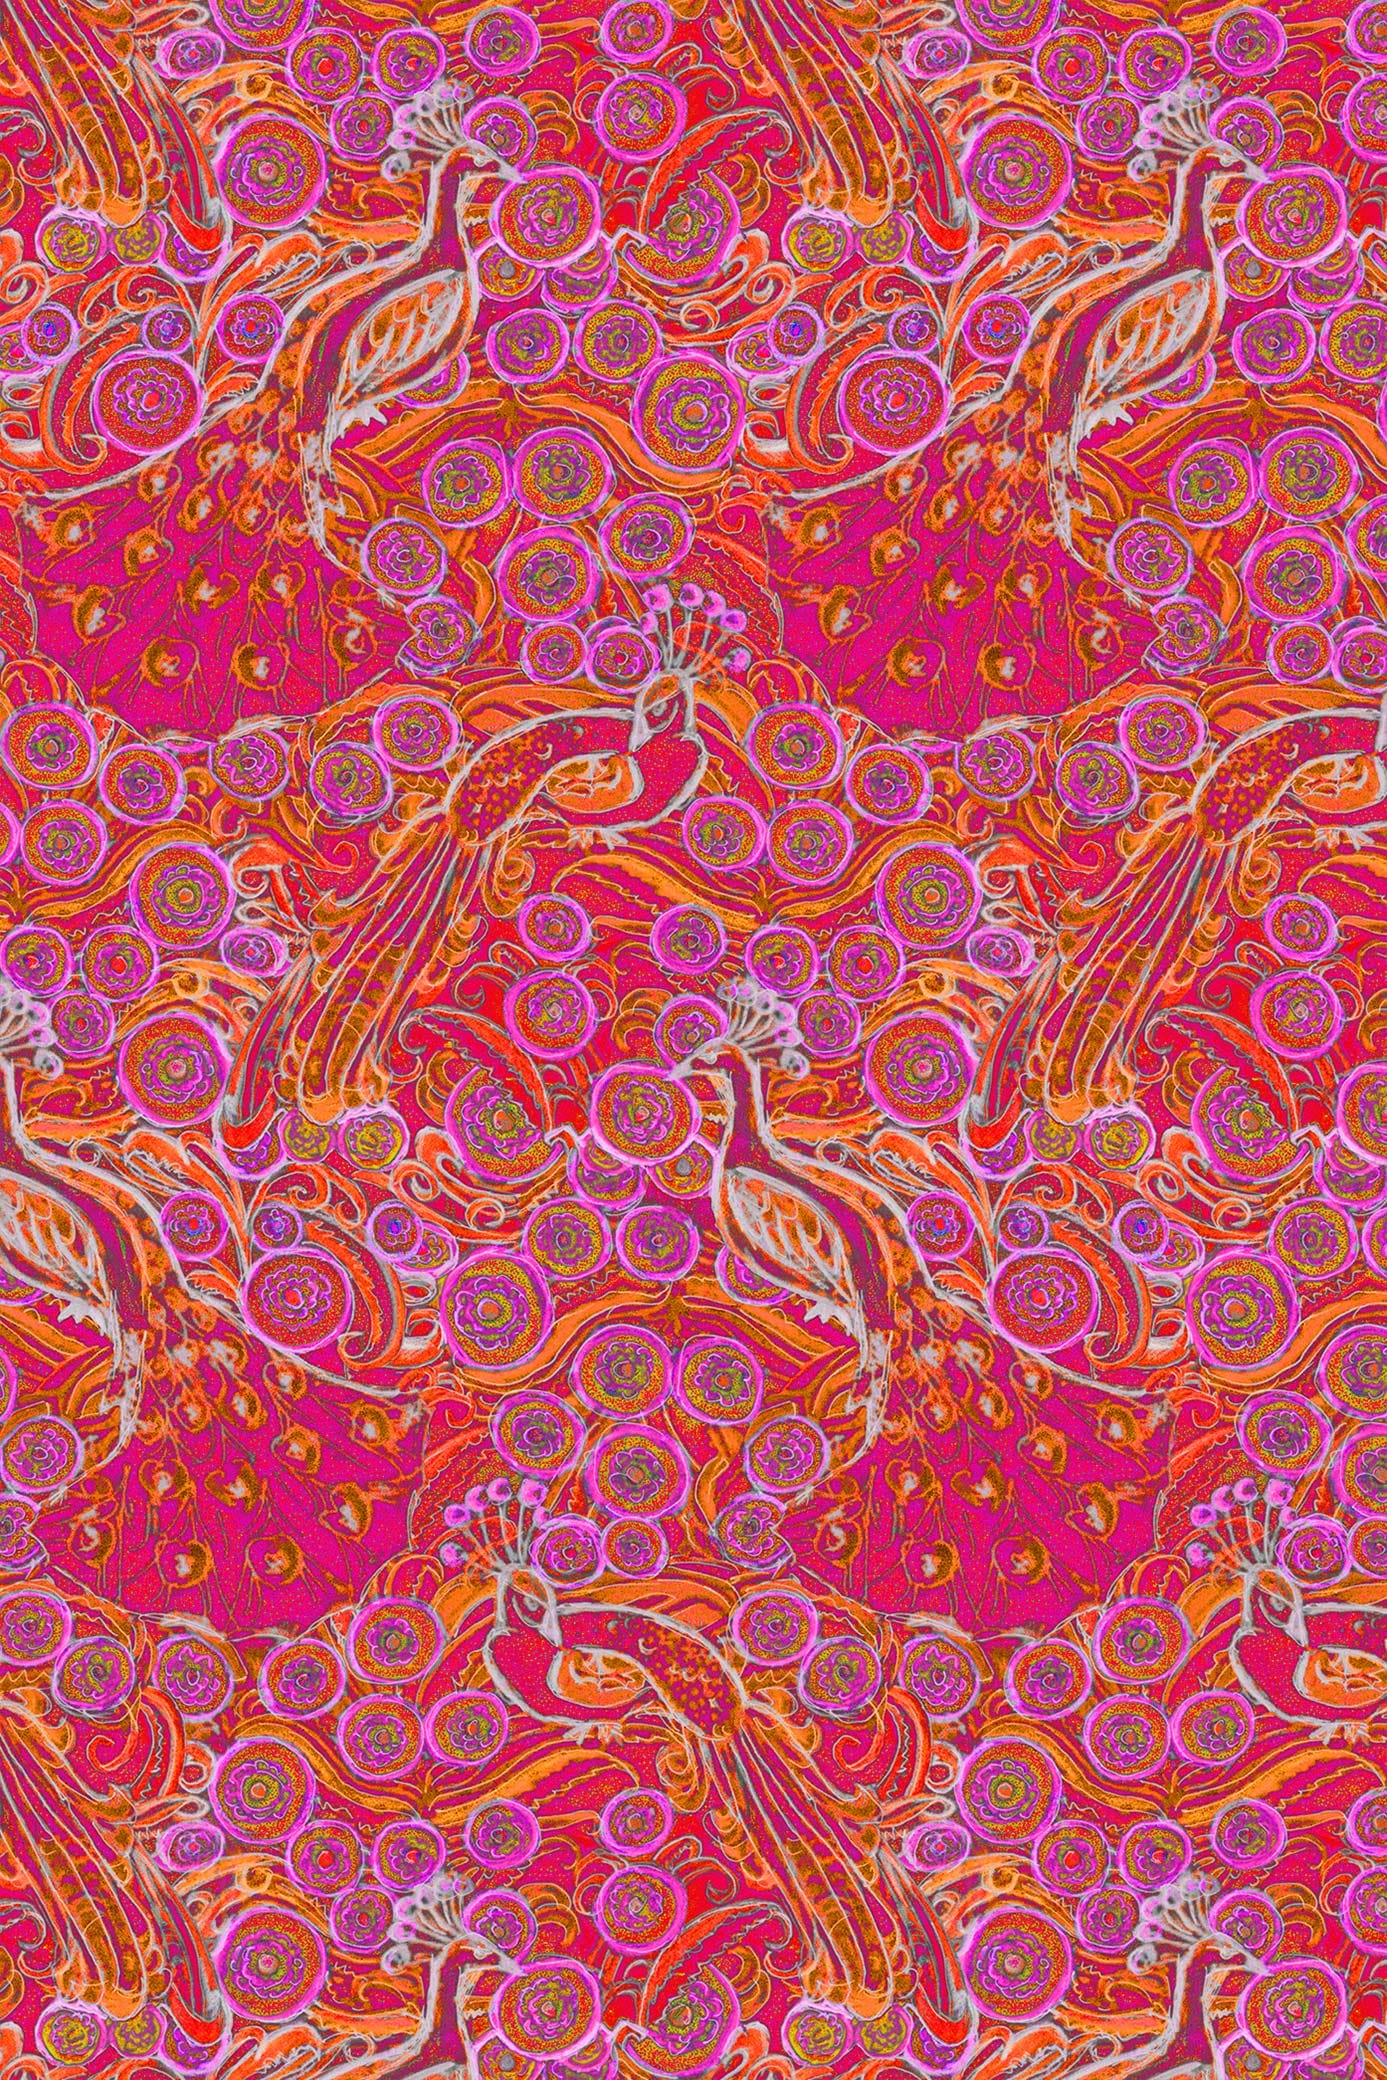 W.E.T. by Ines Schneider Accessoire P5107.2 / S ObiBelt Batist Solo 22 / Pavone mode hamburg print sommerkleid Unique Prints Summer Dress Handdesignierte Prints Print